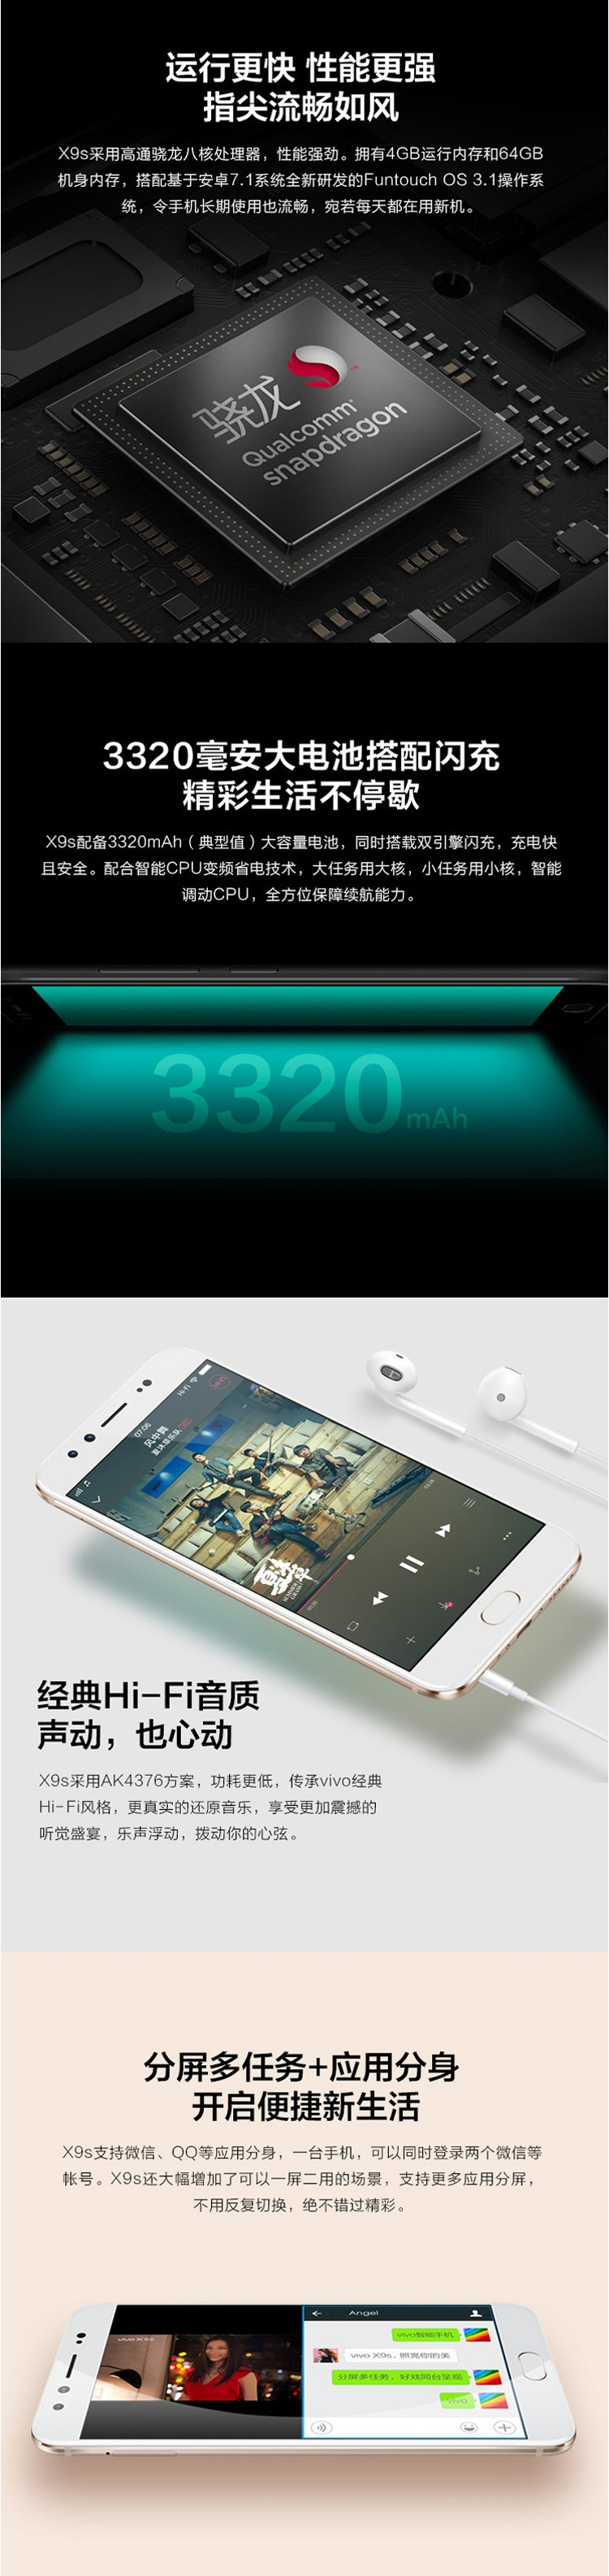 VIVO X9S 4GB+64GB 全网通手机 双卡双待 赠送诺克音乐蓝牙耳机一部